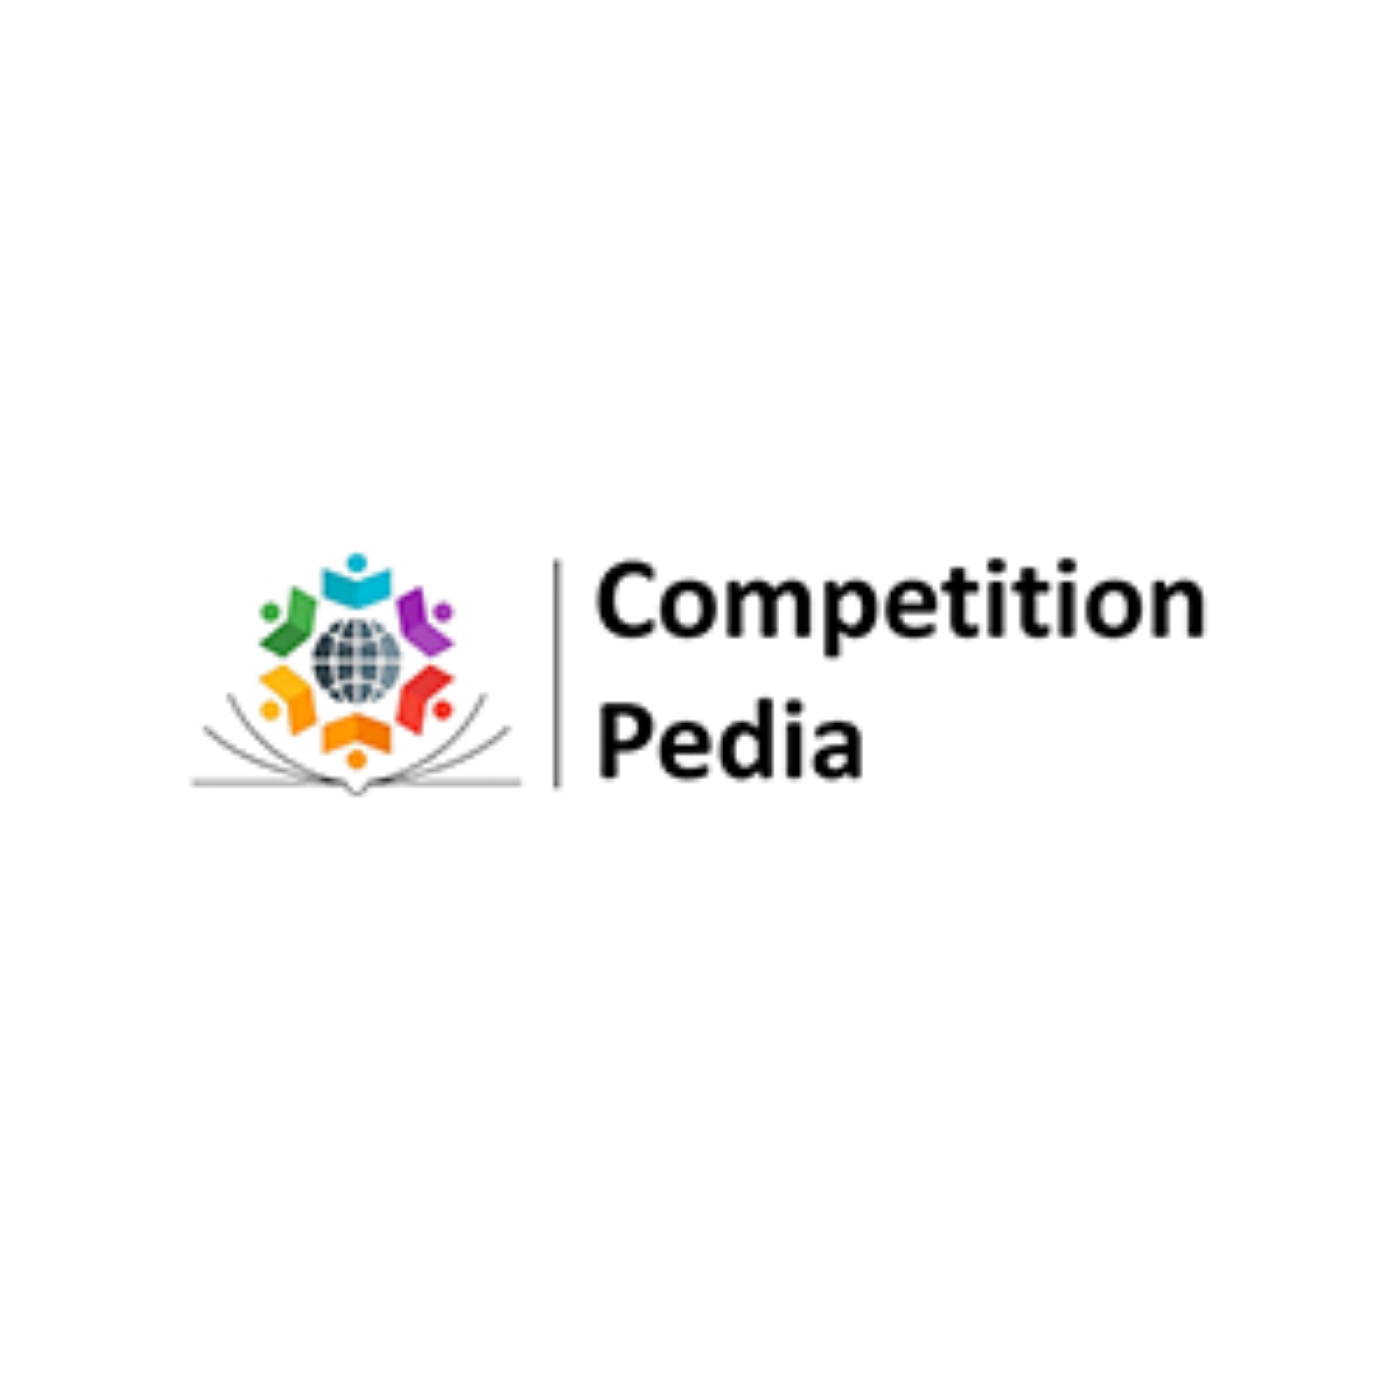 CompetitionPedia|Coaching Institute|Education